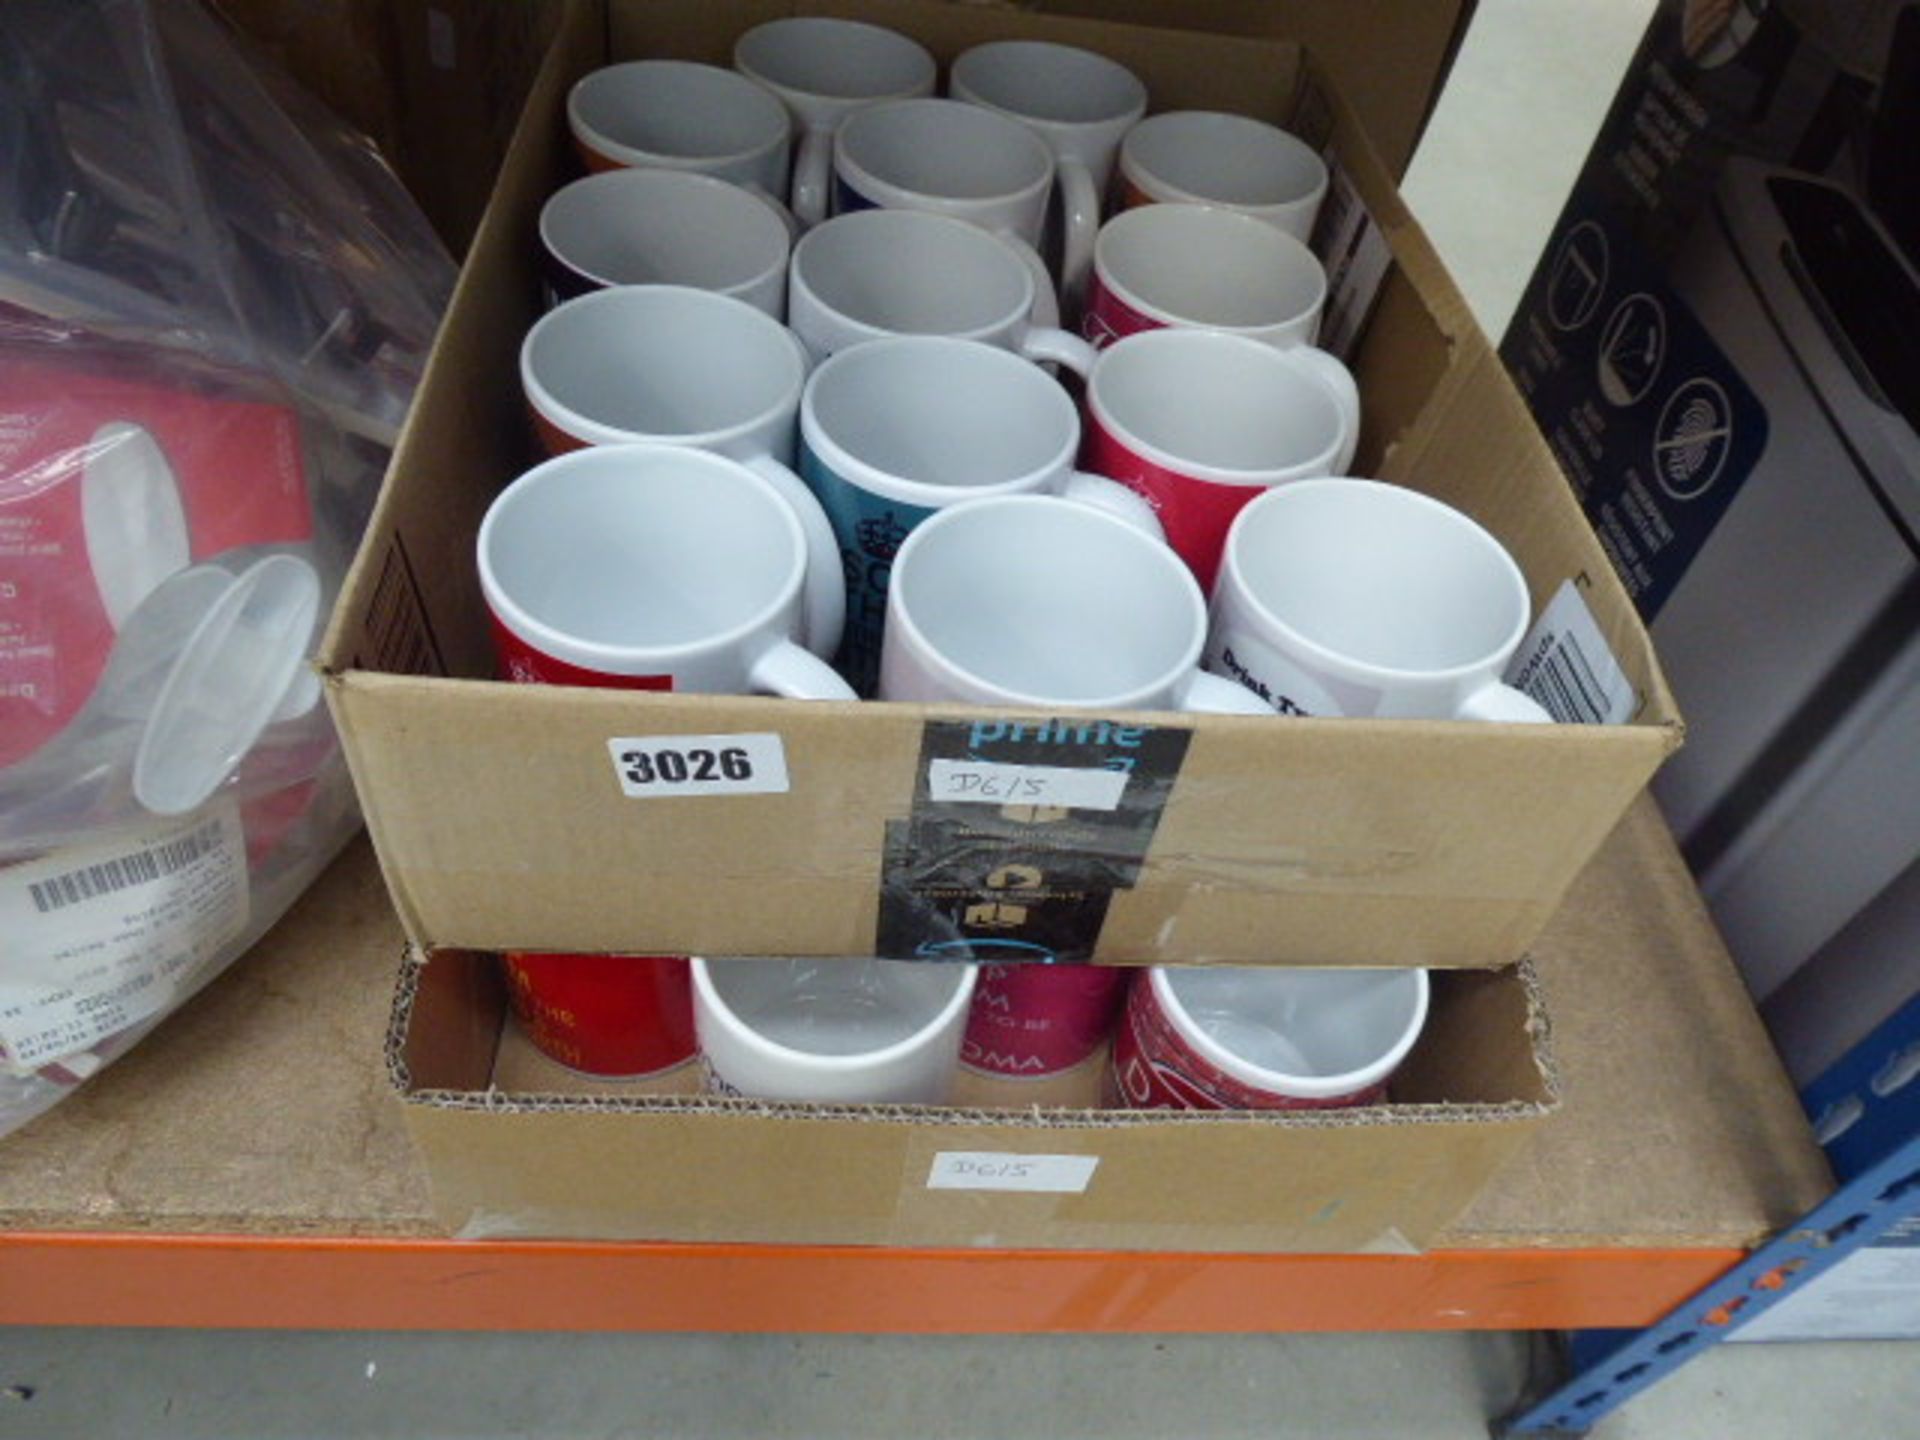 2 trays containing quantity of mugs